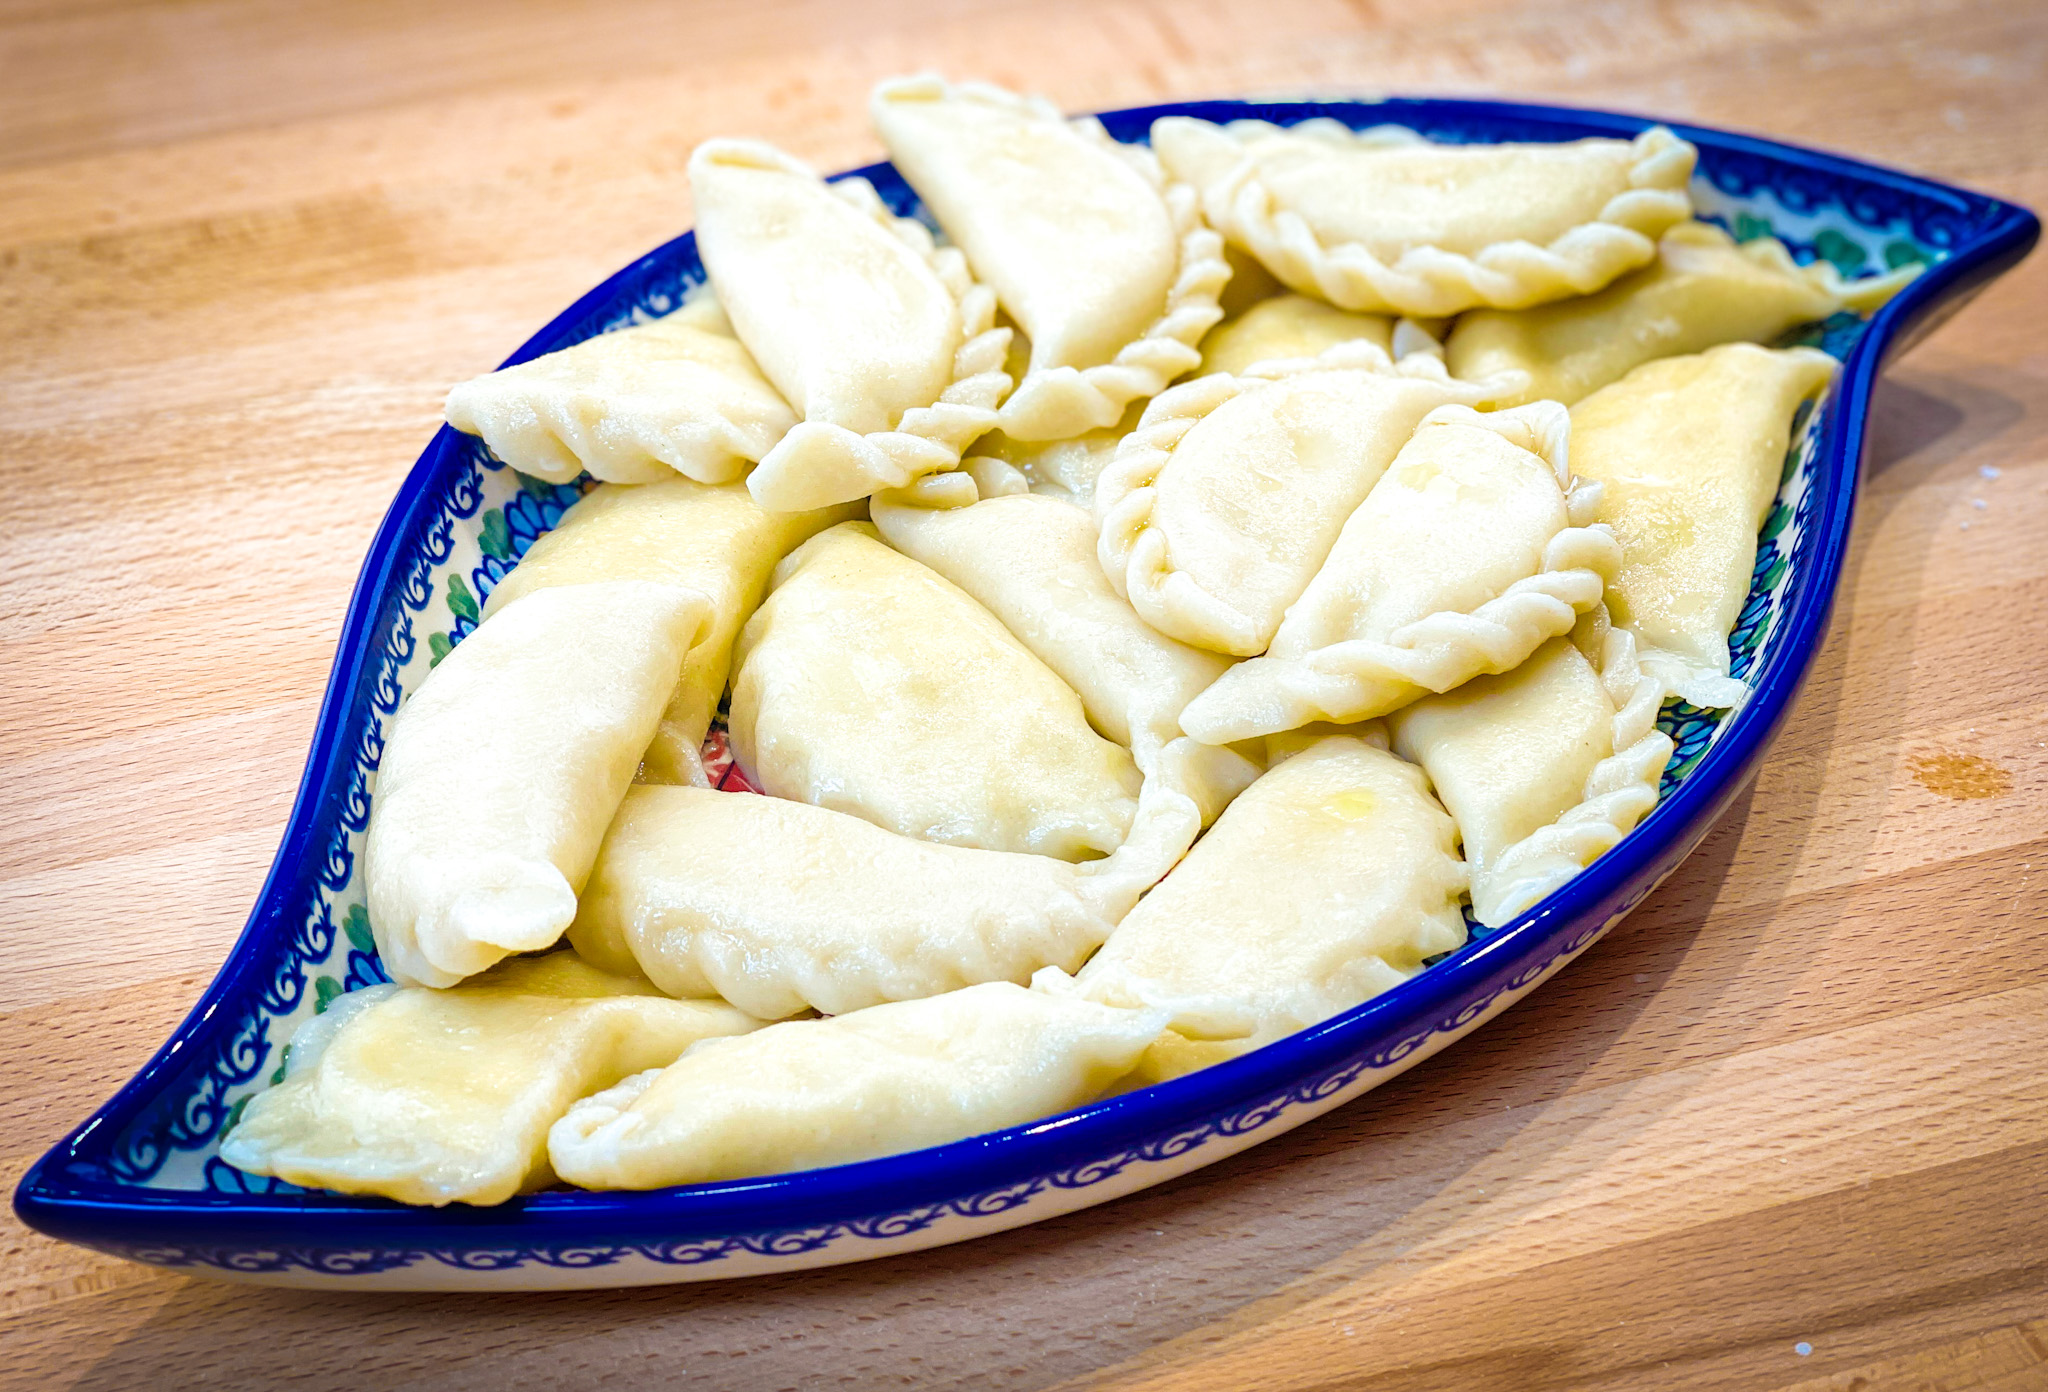 Pierogi with cheese and potatoes